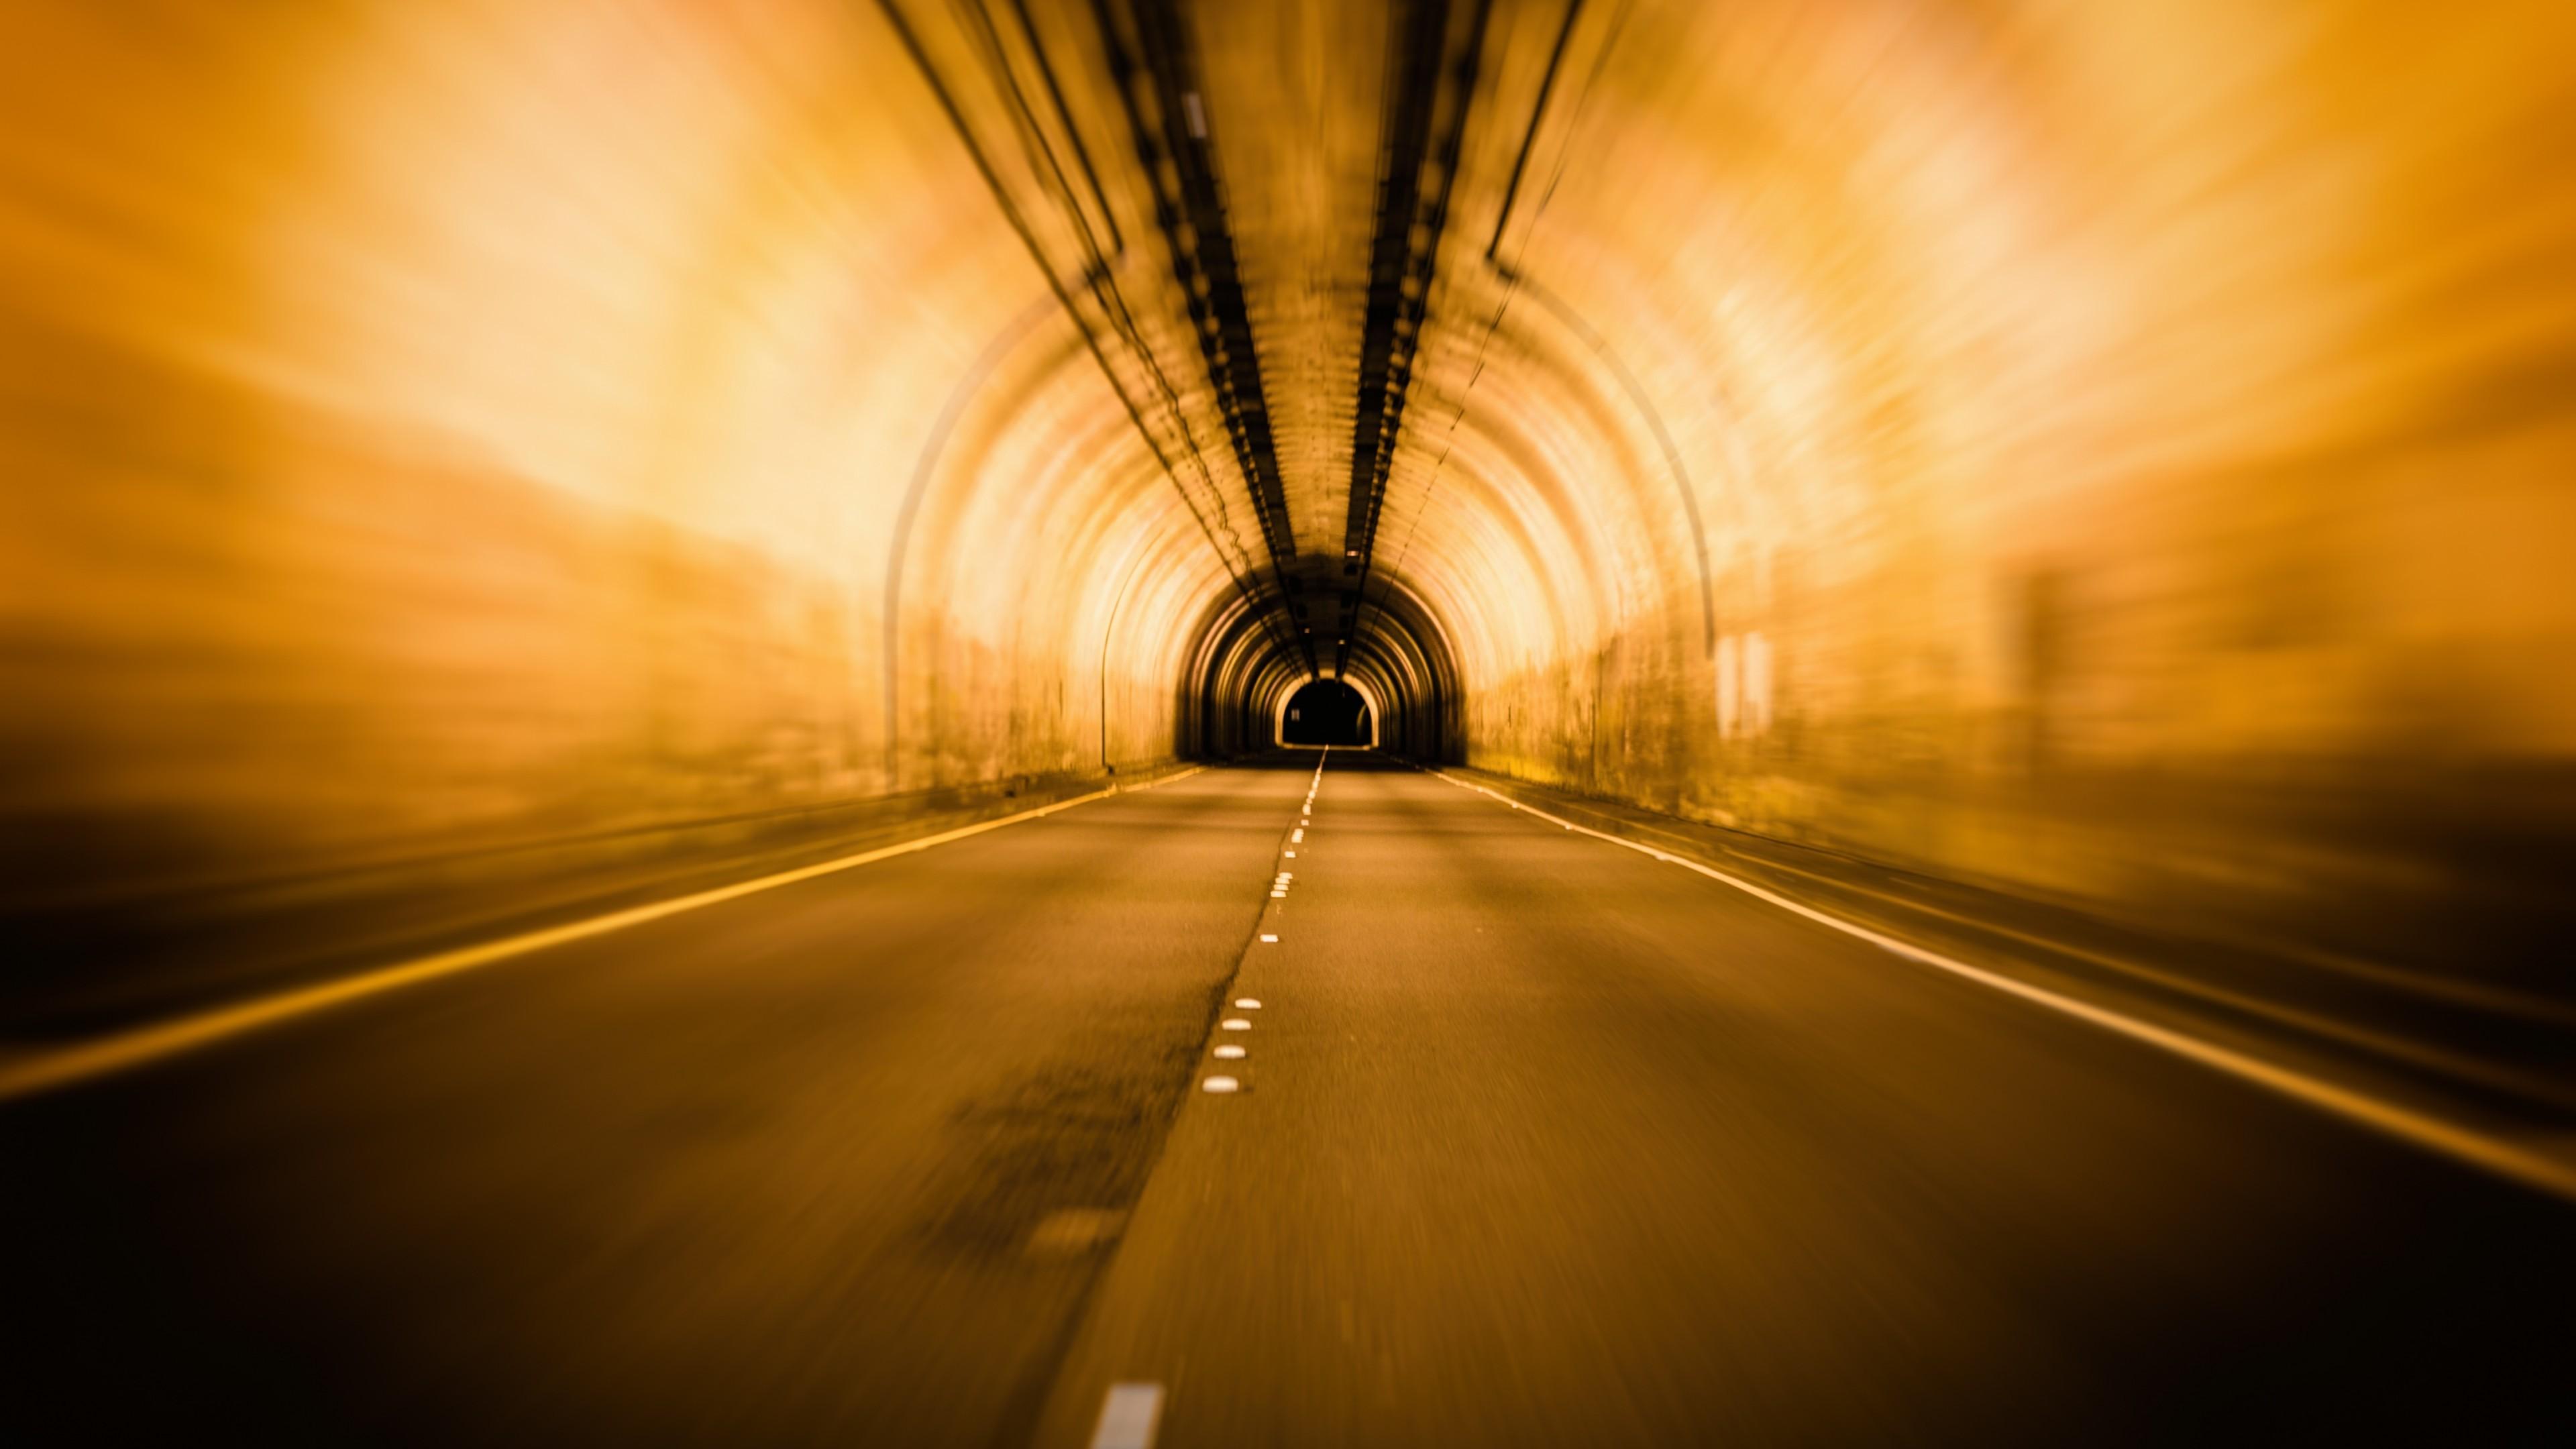 Download 3840x2160 Tunnel, Lights, Scenic, Underground Wallpaper